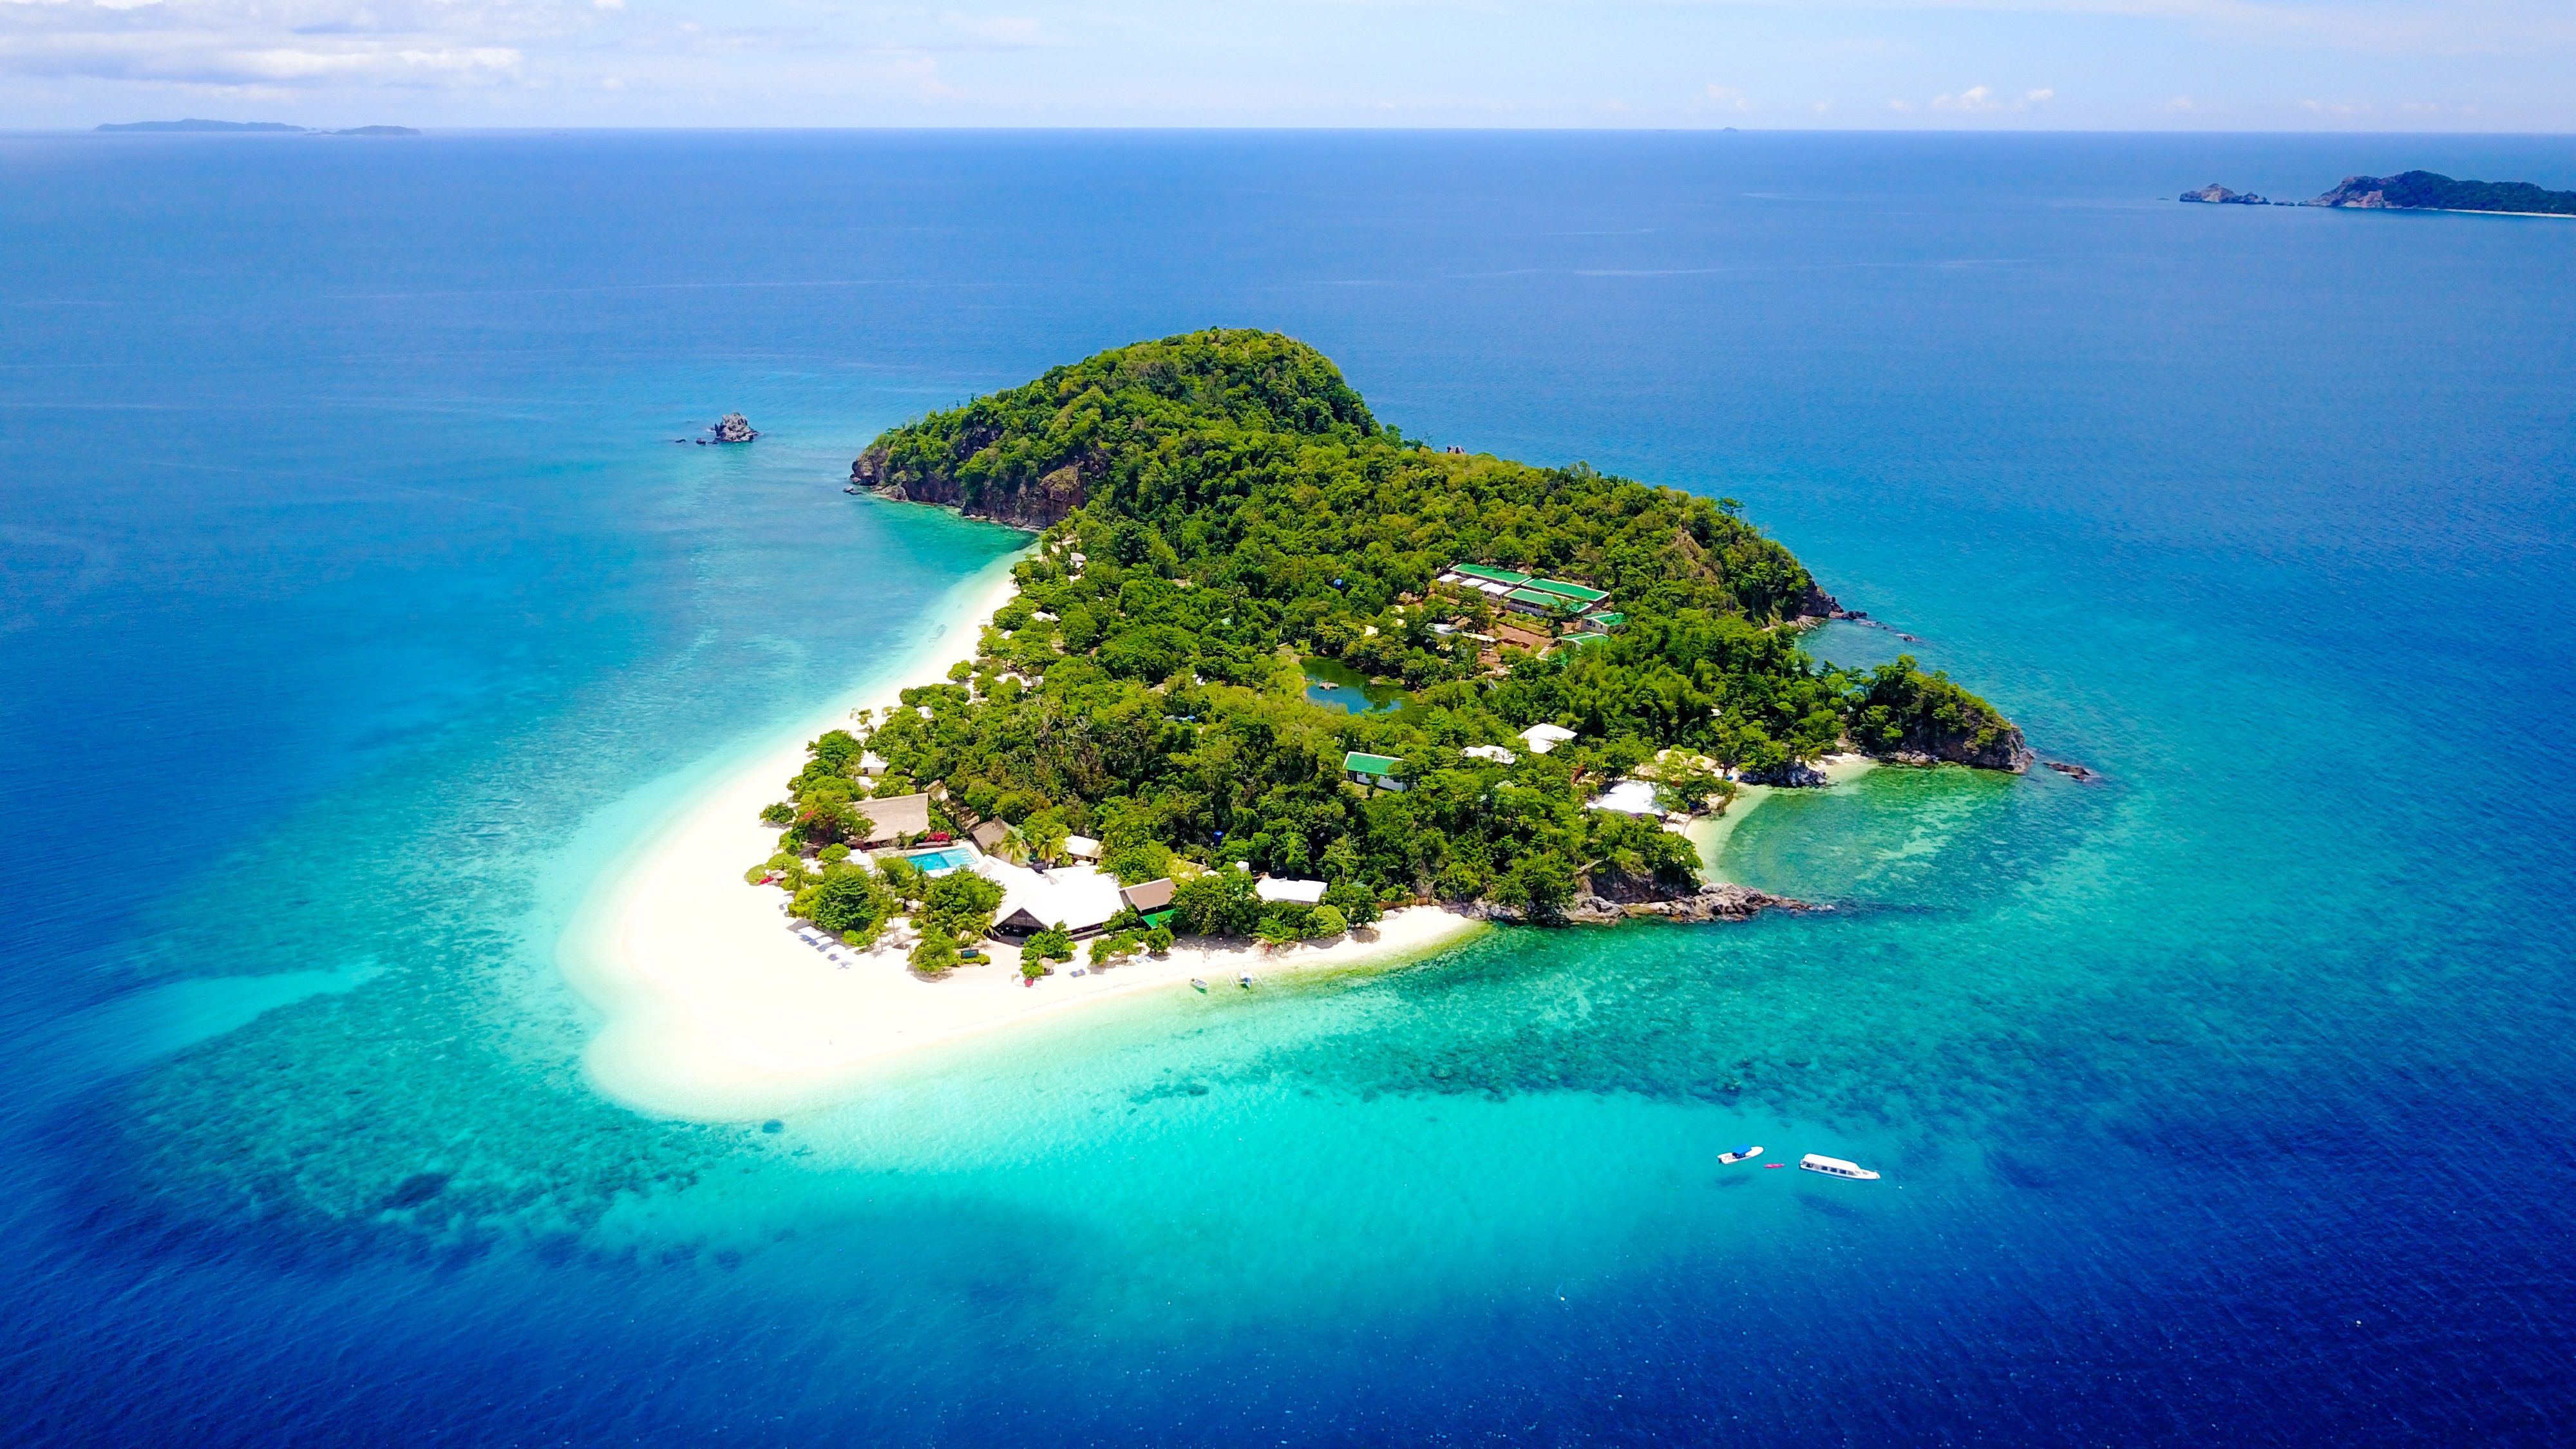 Club Paradise Palawan (private island resort)